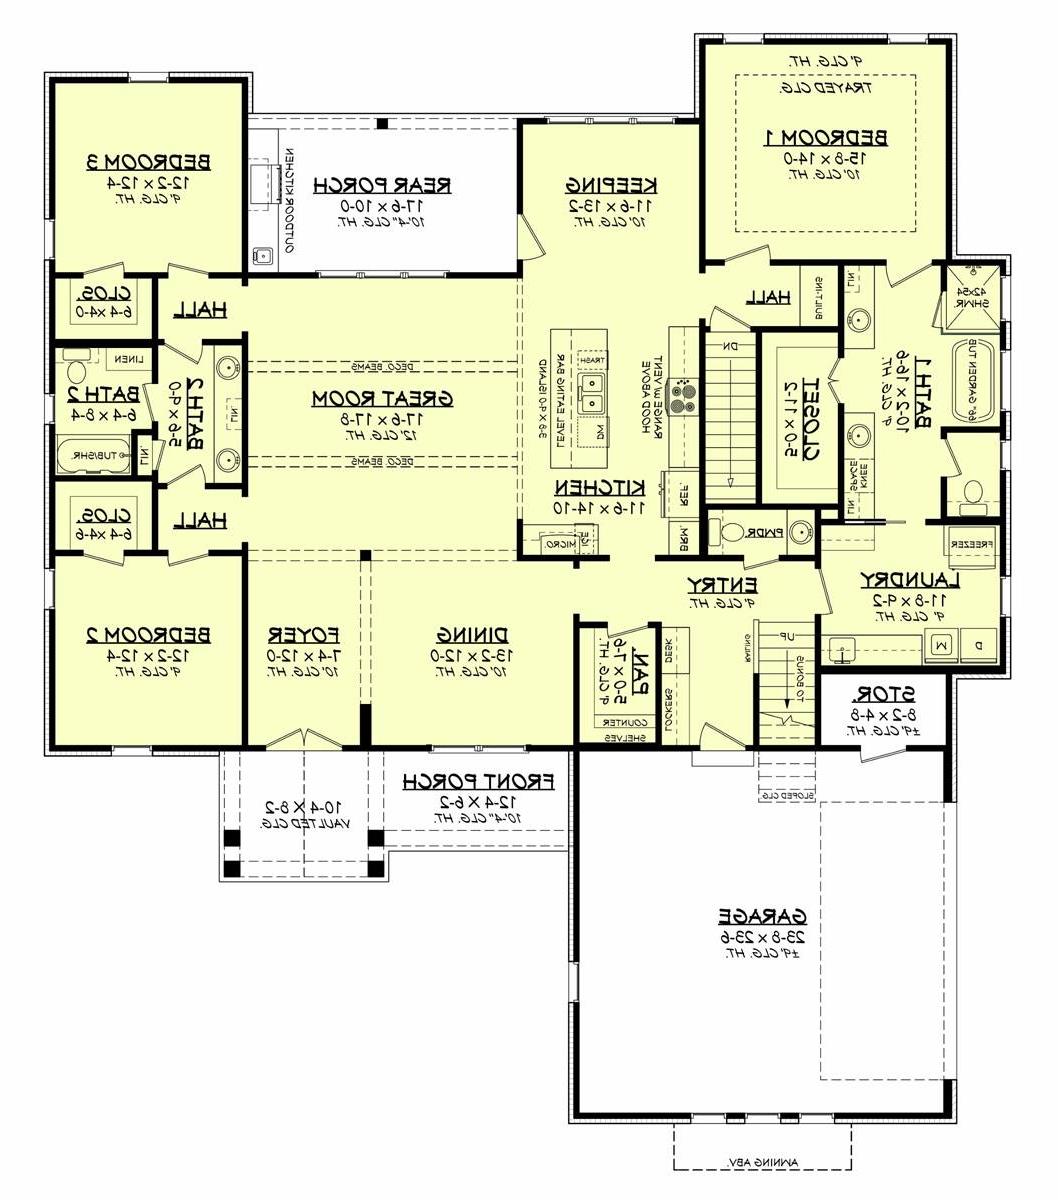 Basement Option Plan image of Richmond Avenue House Plan